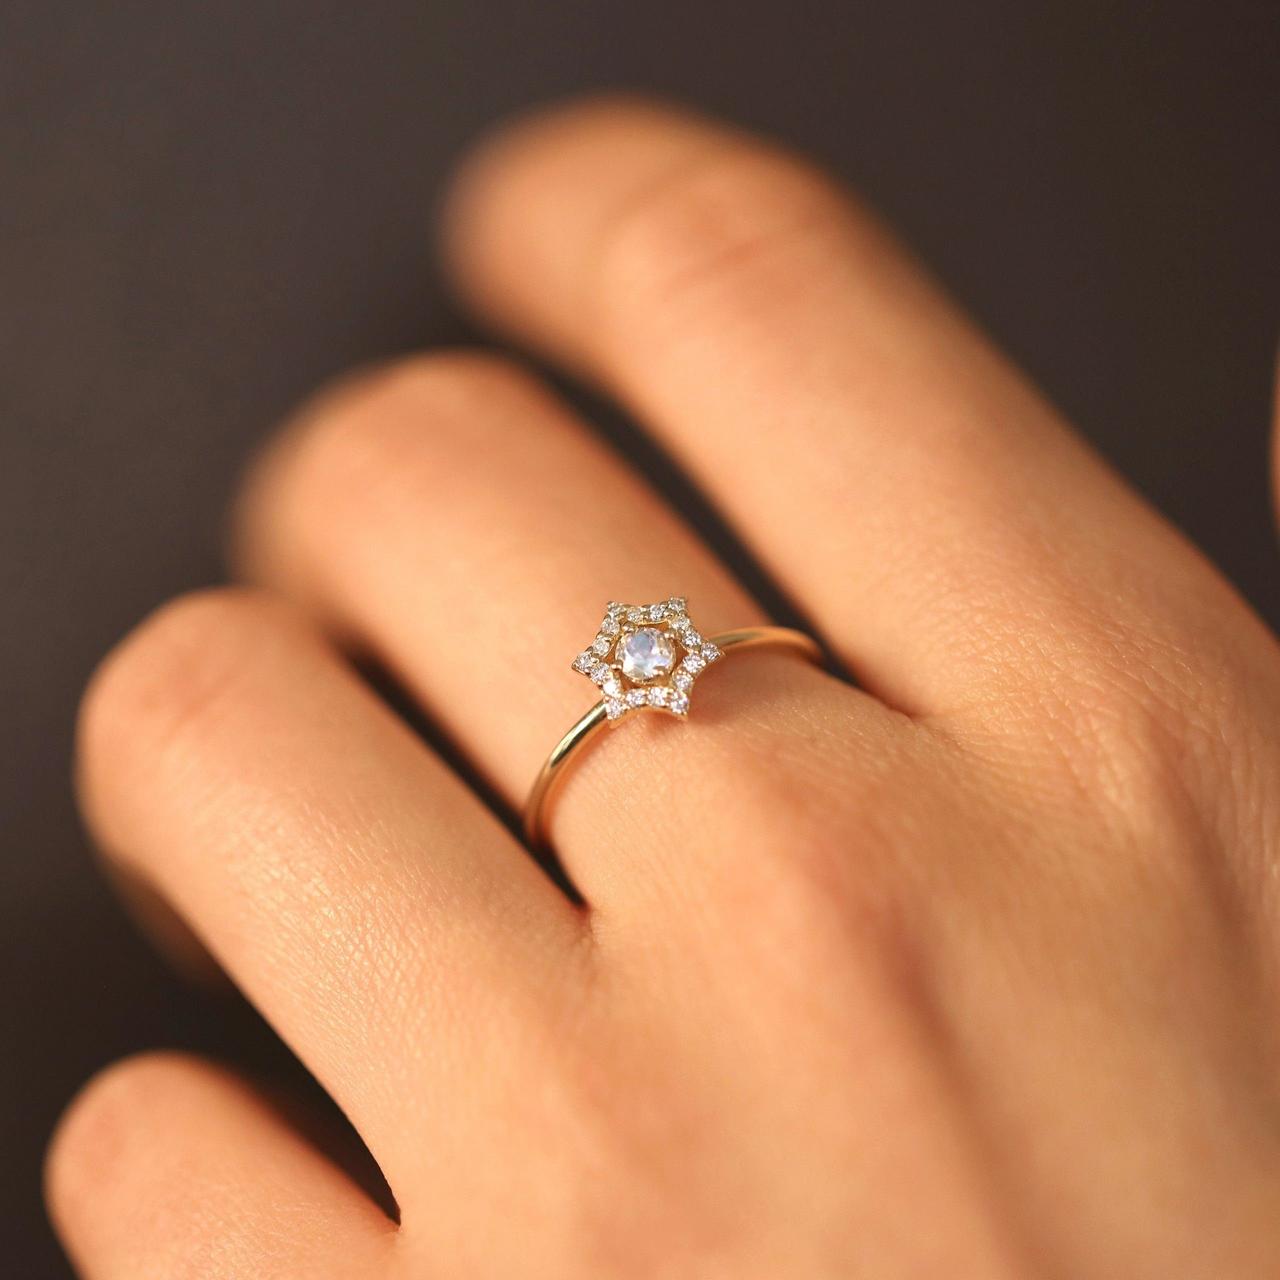 Napoo-Rings Women Fashion Handmade Diamond Moonstone Encrusted Stylish Ring Engagement Ring 